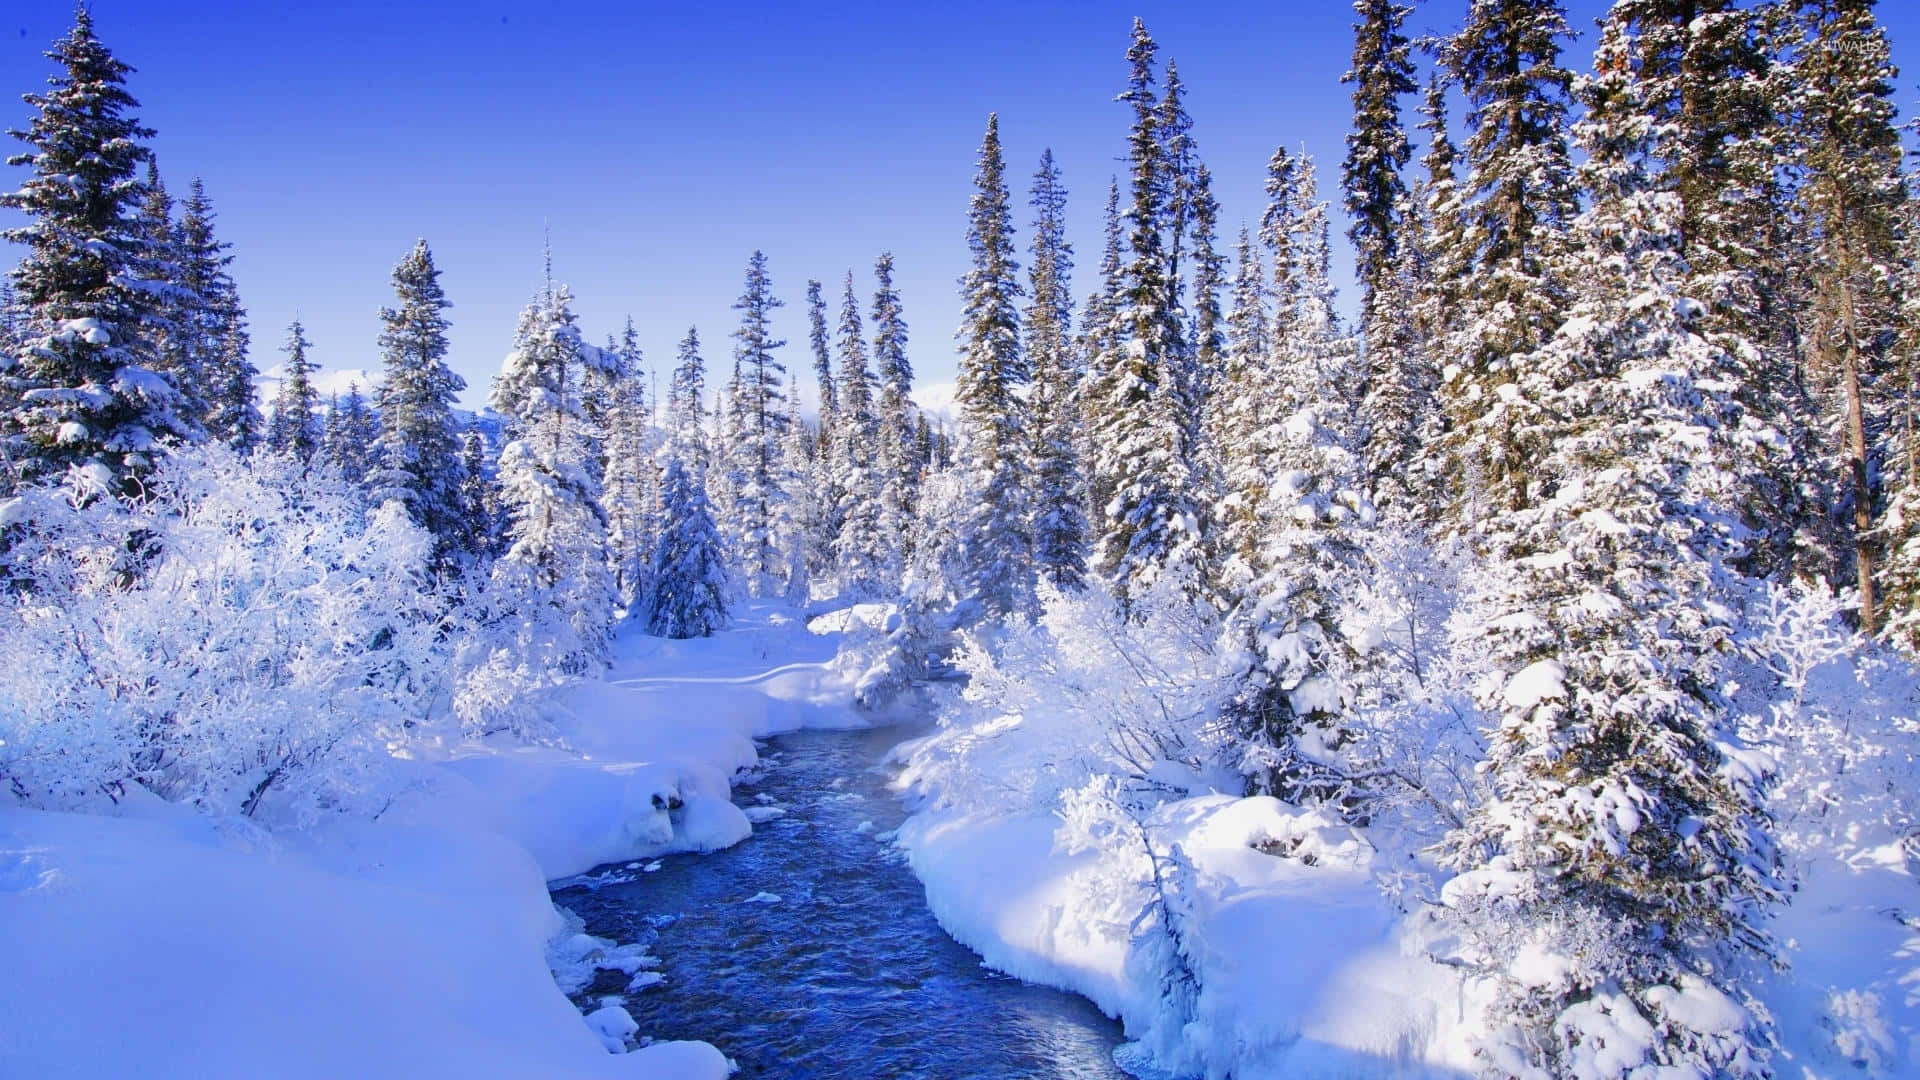 Wander through a magical Snowy Forest